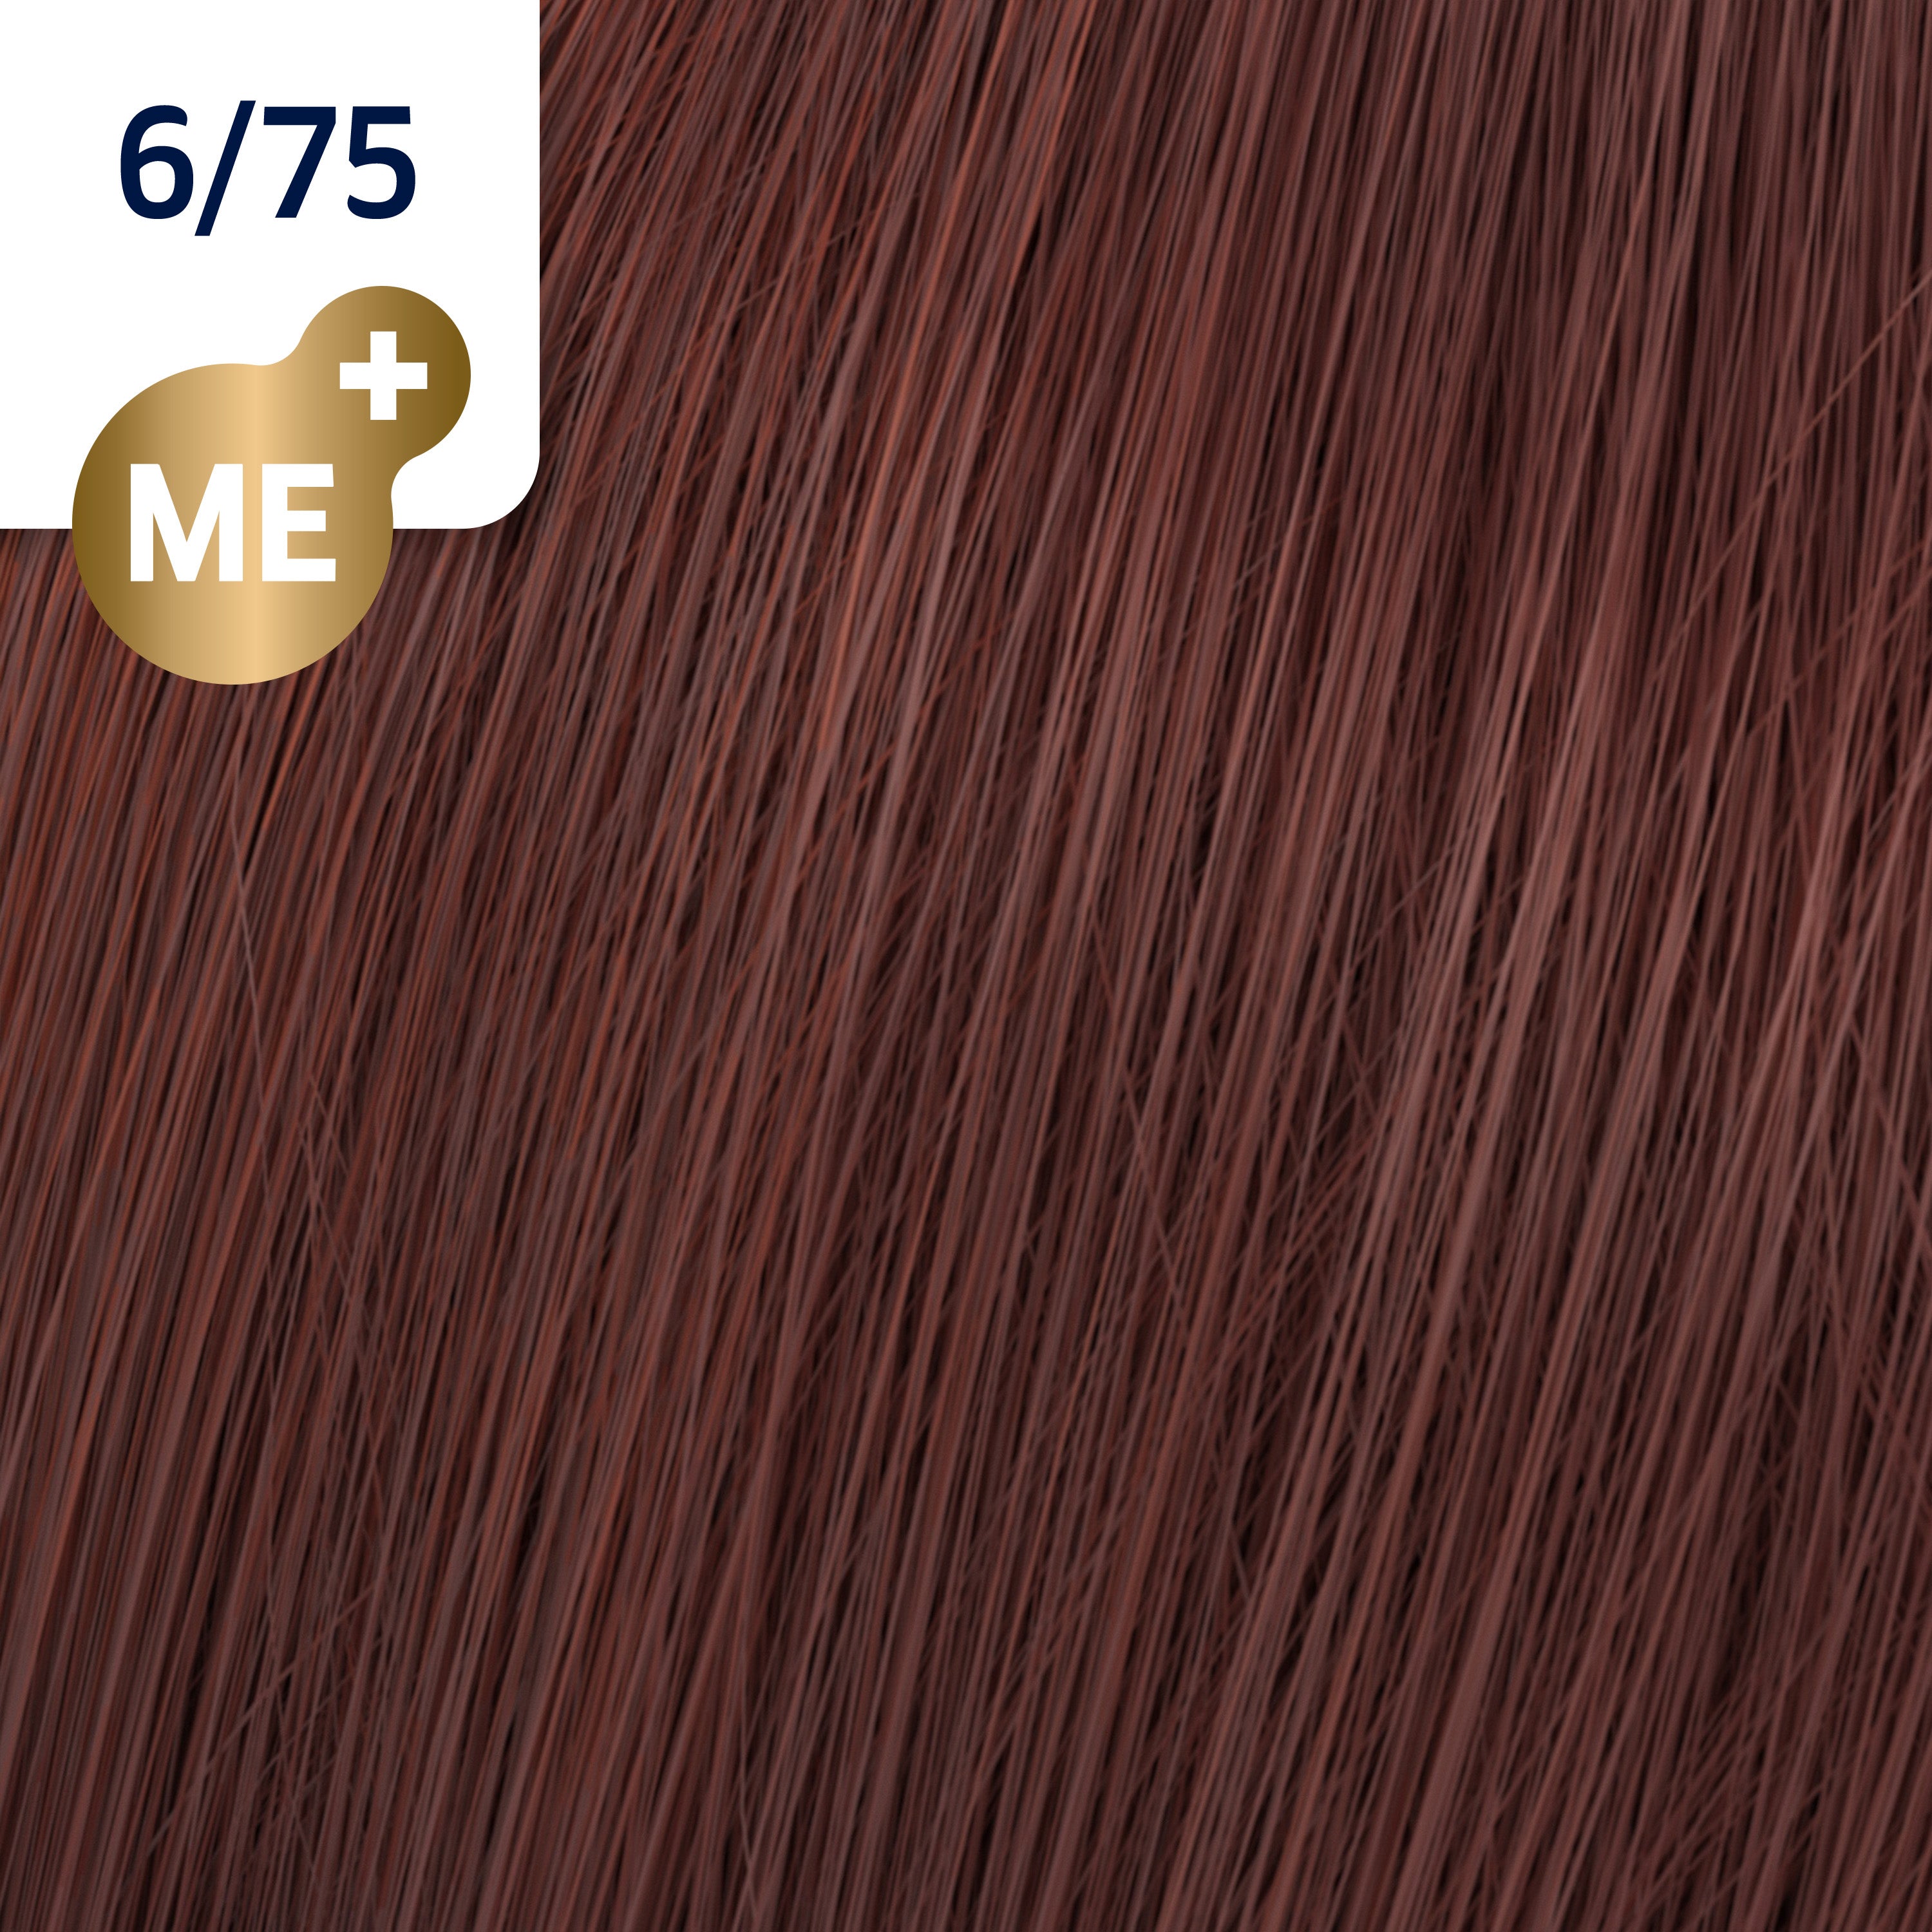 Wella Koleston Perfect Me+ Deep Browns 6/75 Dark Brown - Mahogany Blonde